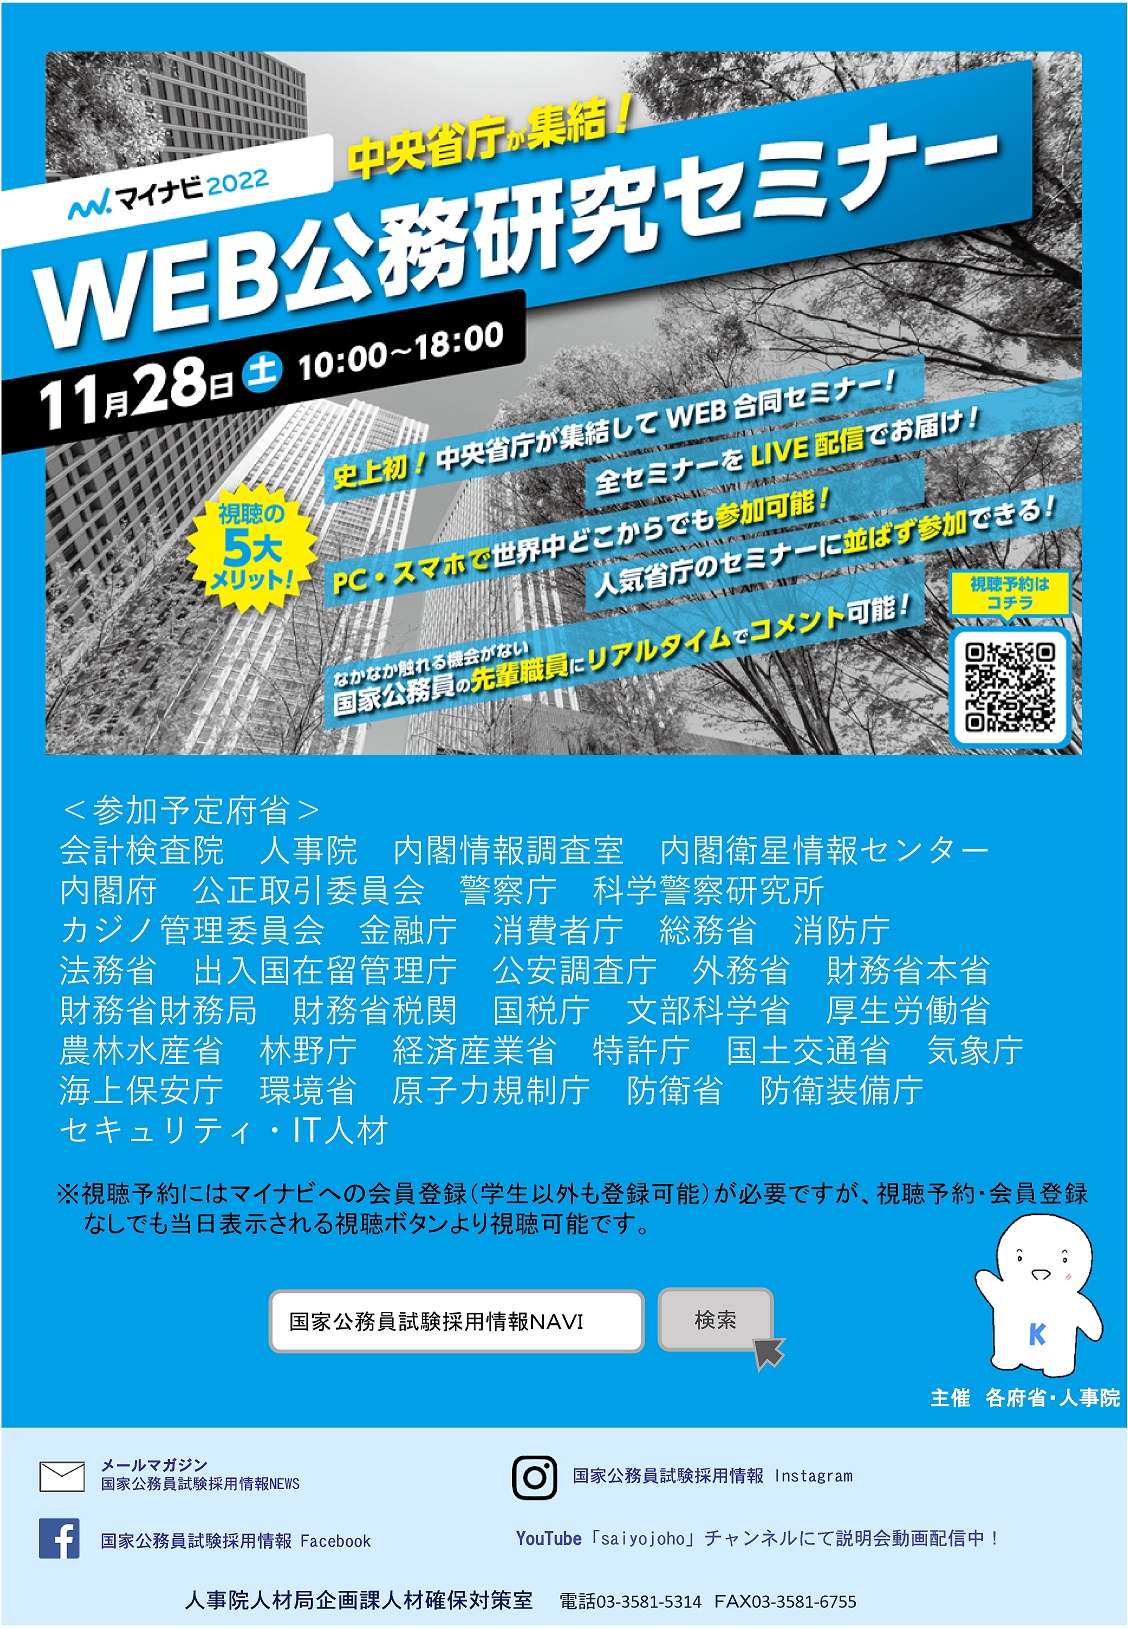 WEB公務研究セミナーのポスター